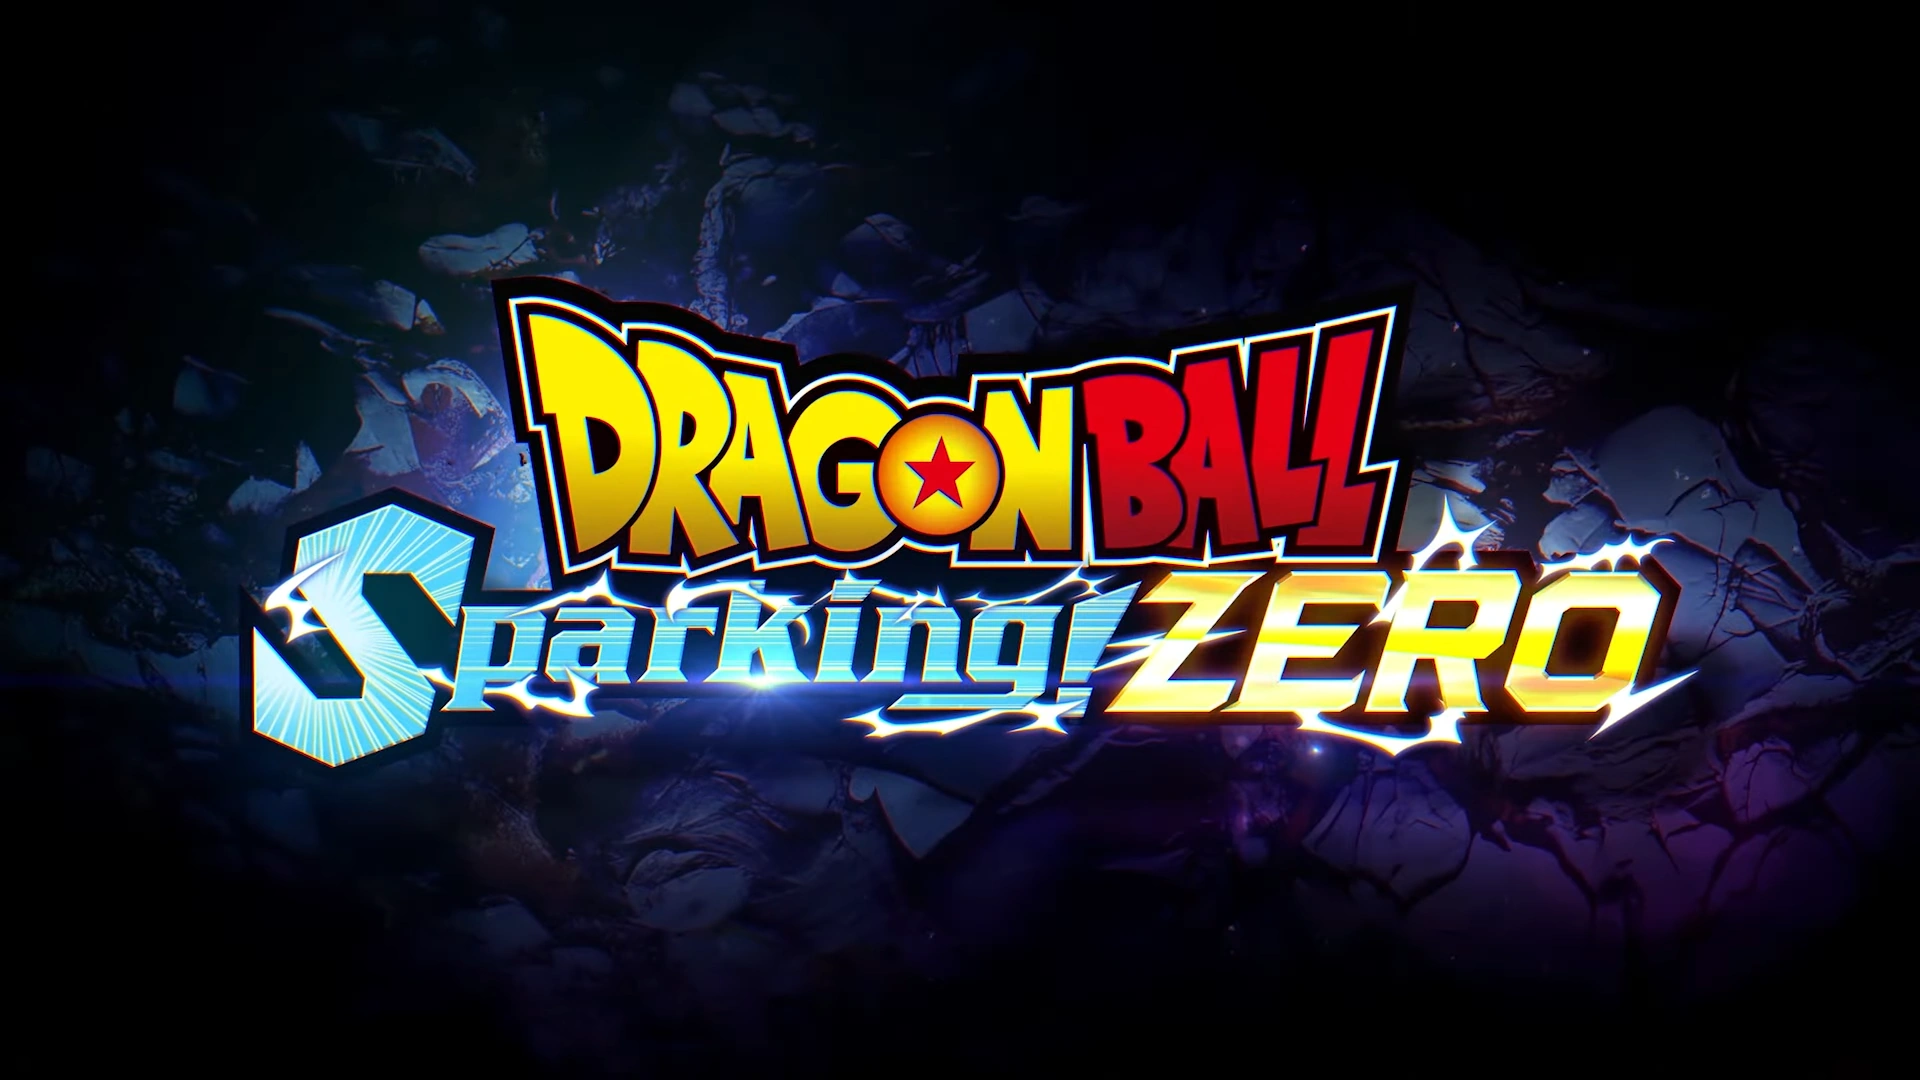 Dragon Ball Z: The Return of Cooler, Dubbing Wikia